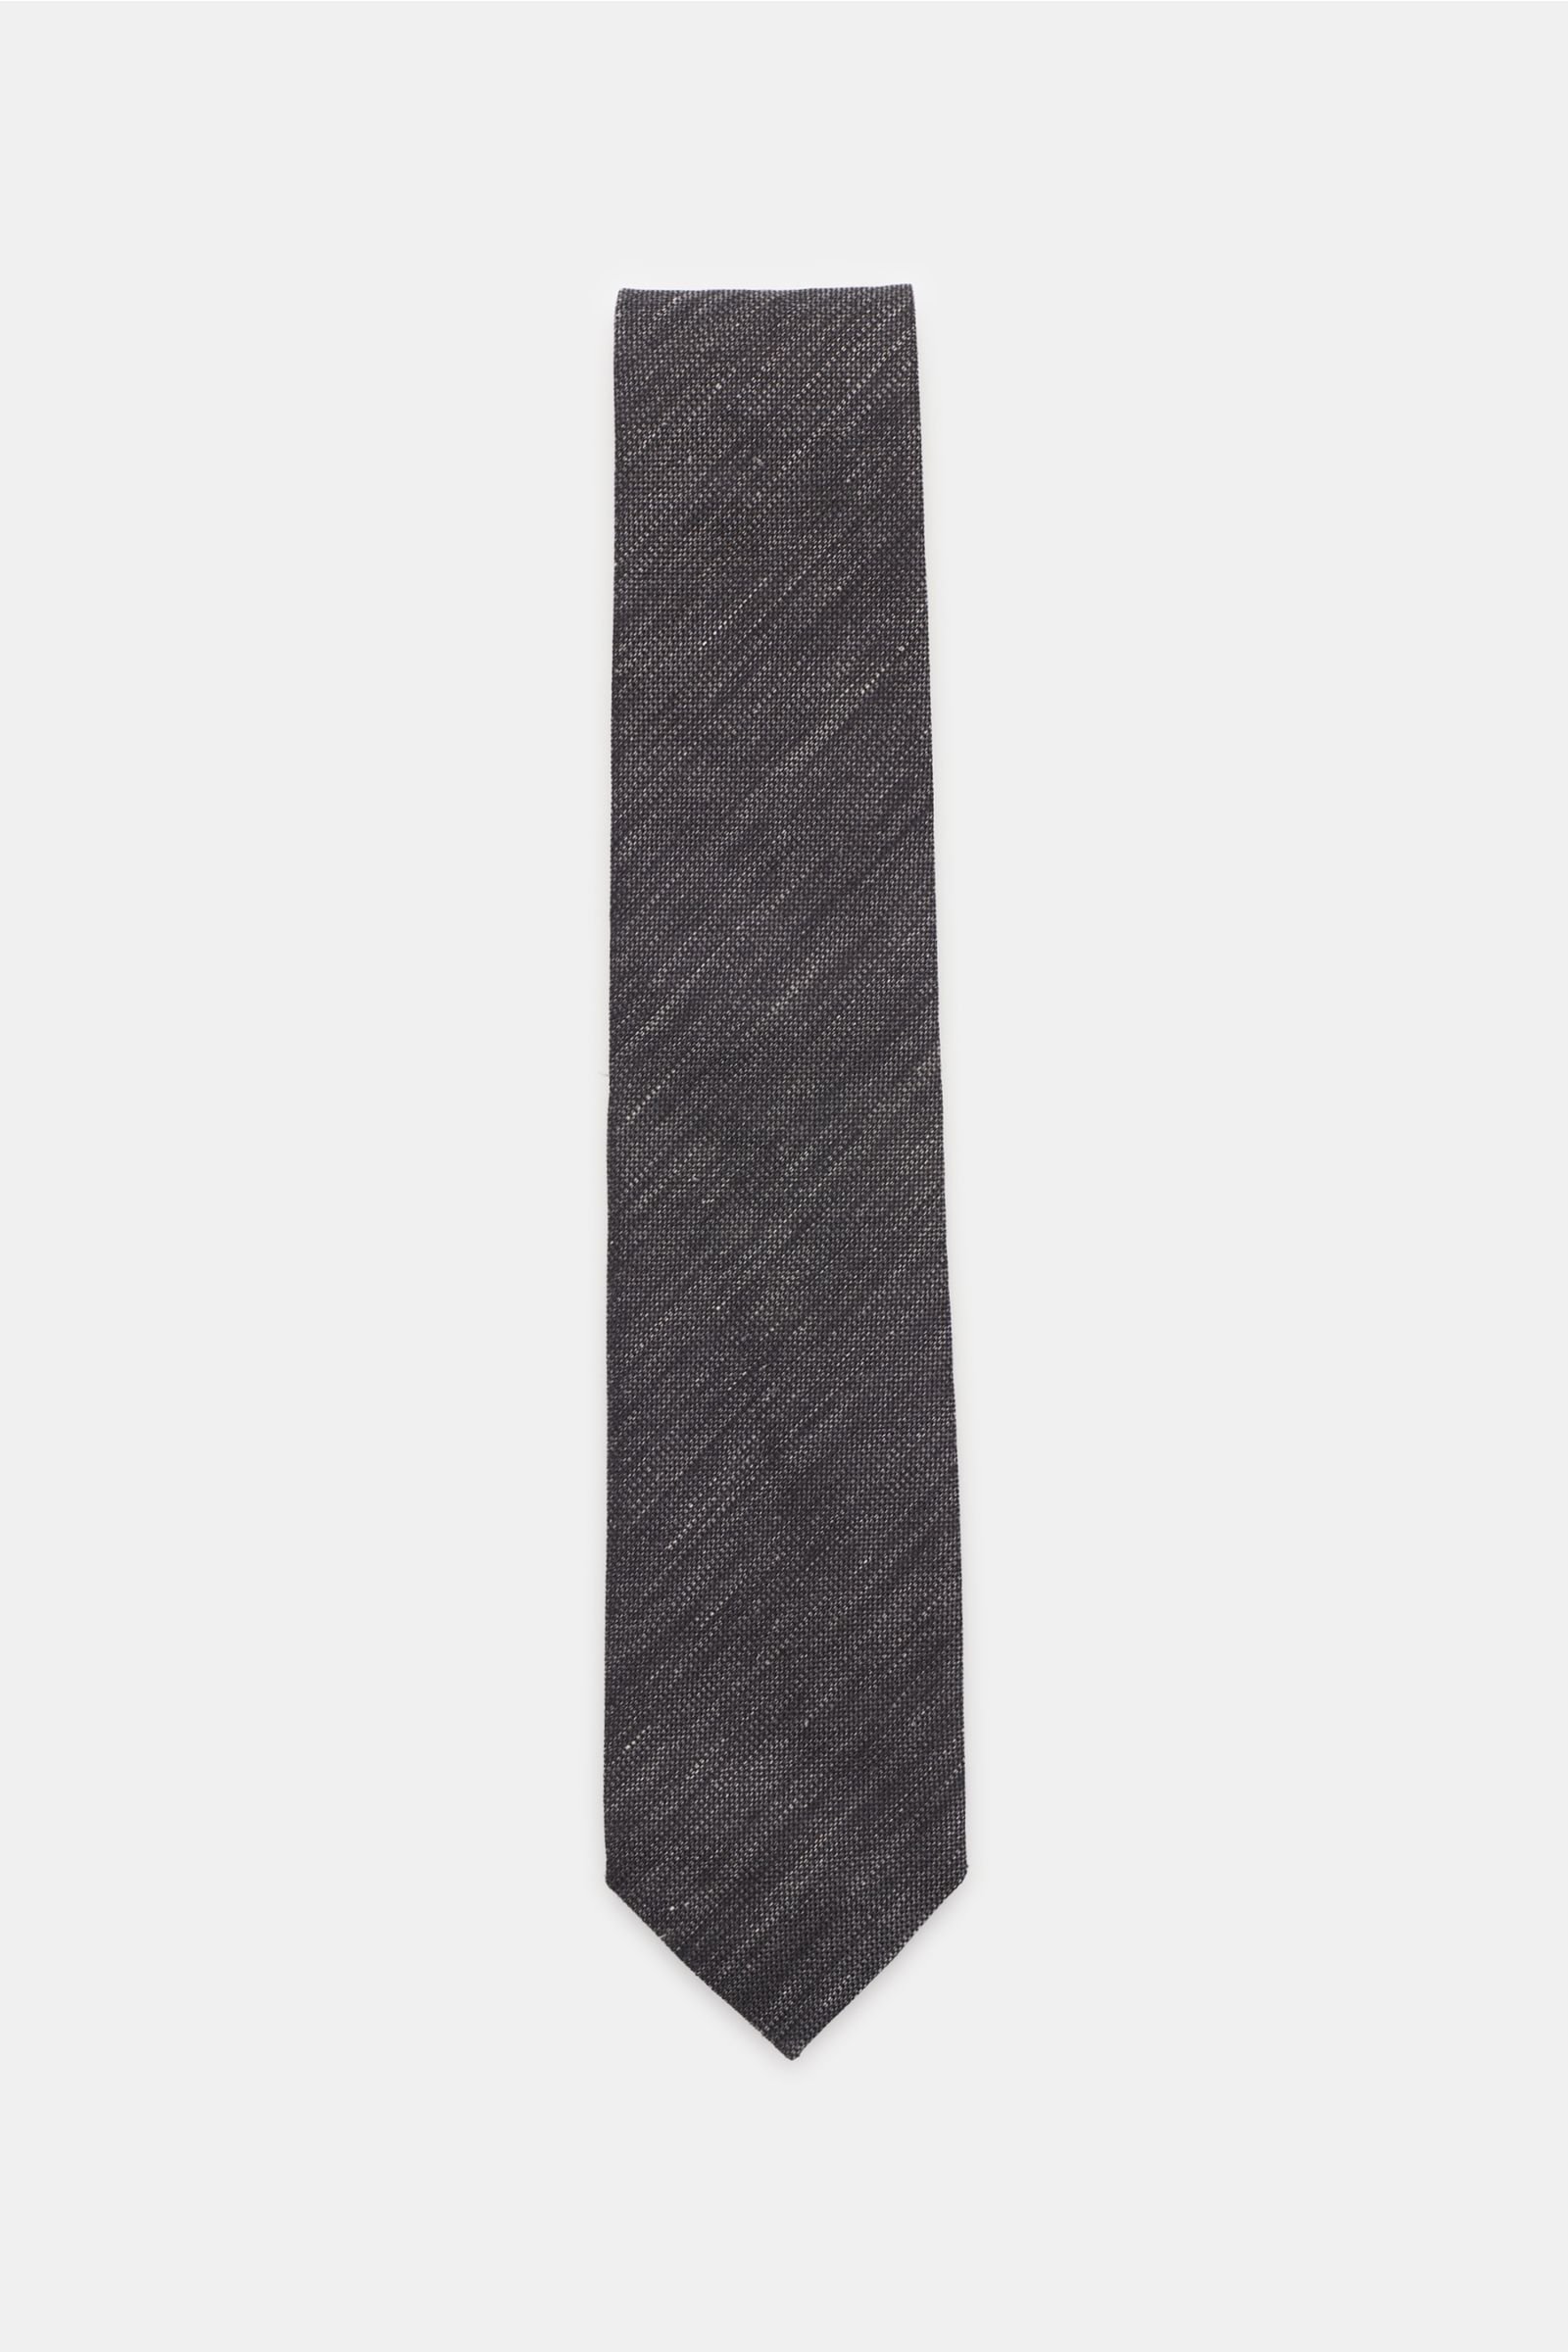 Krawatte anthrazit